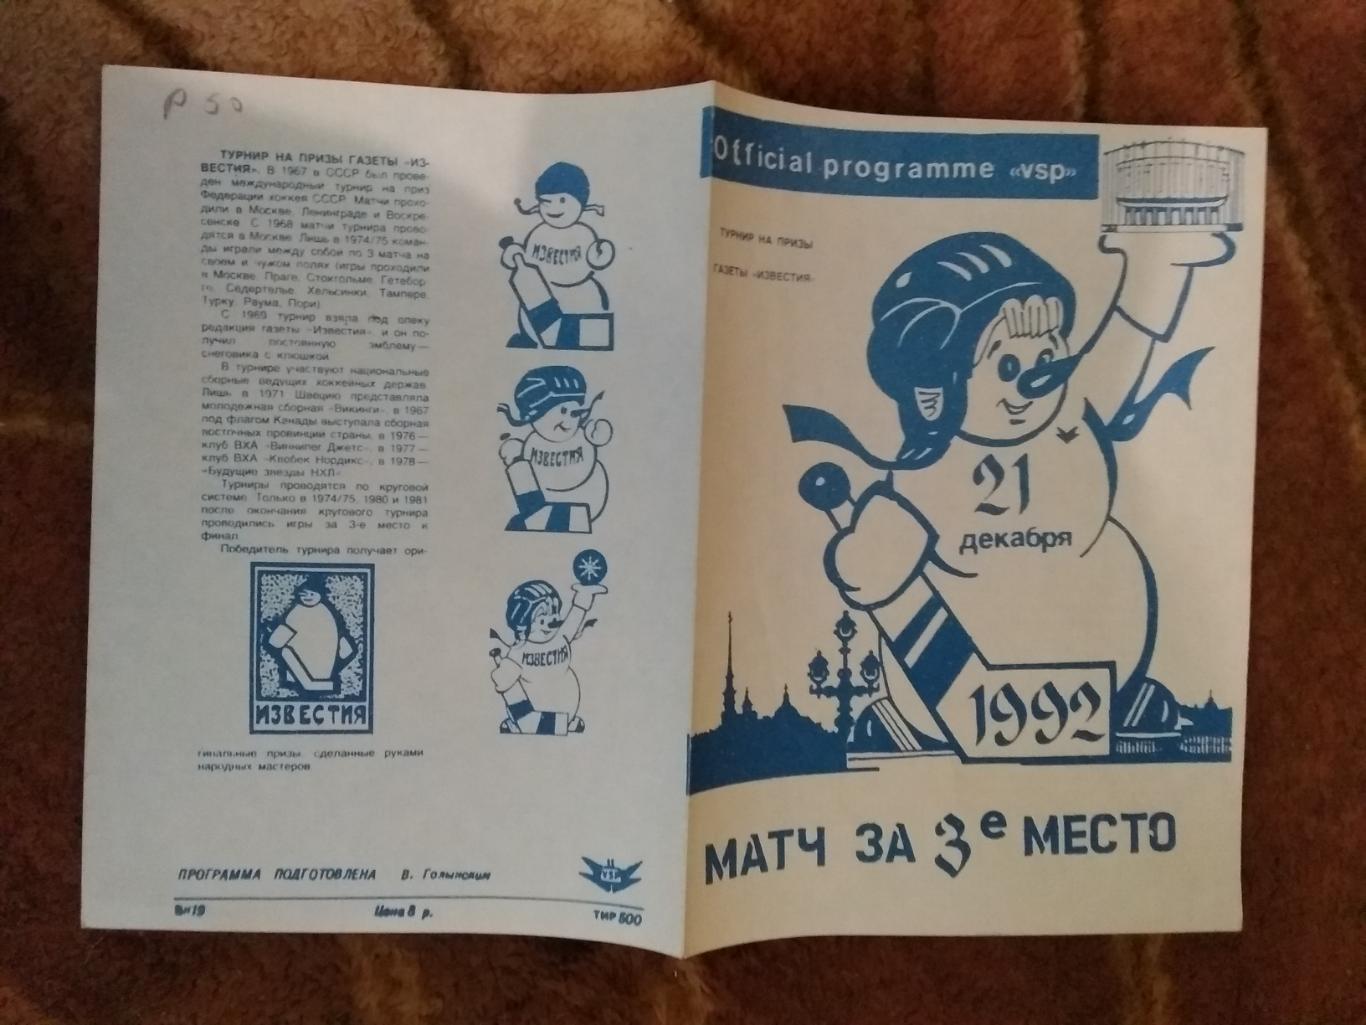 Приз Известий 1992 г. Матч за 3-е место 21.12.1992 г. (Санкт-Петербург).